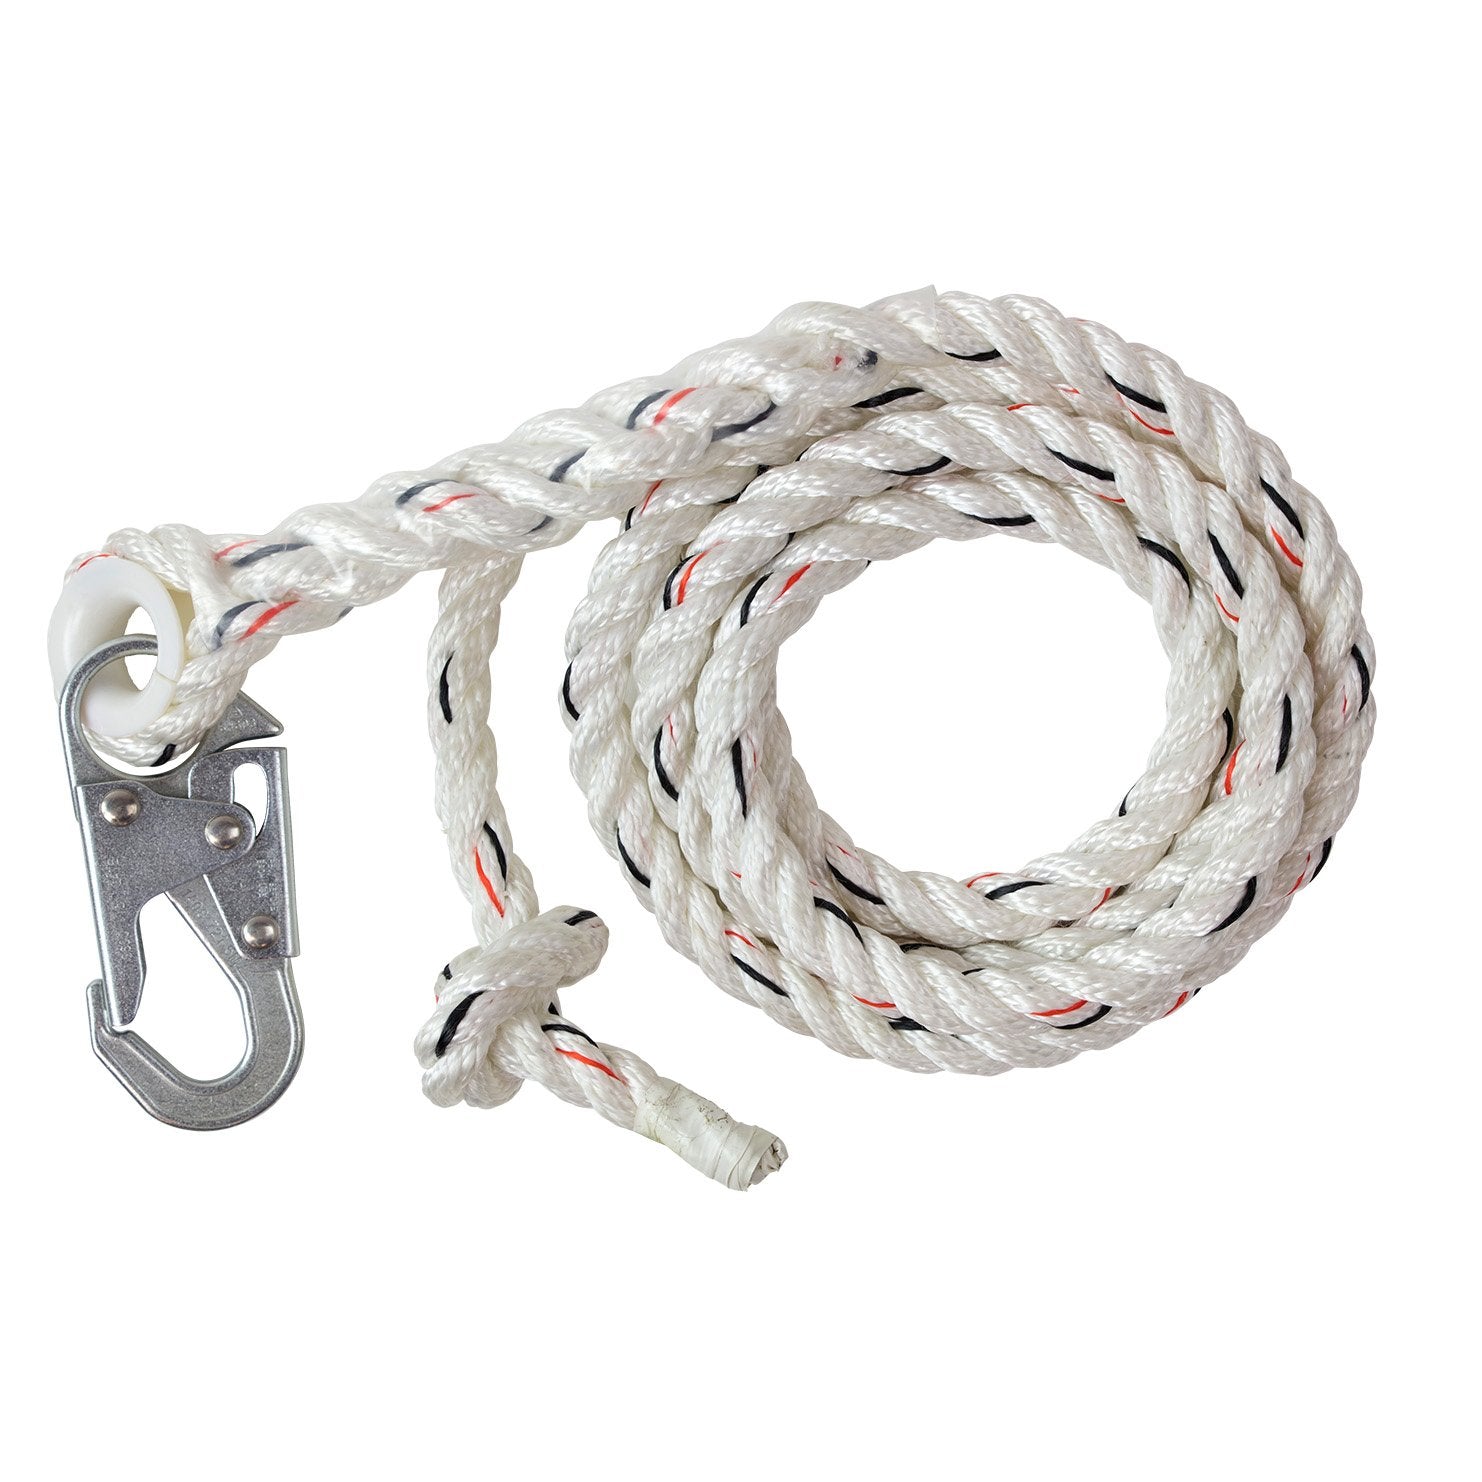 Malta C7053 Vertical Lifeline 50' Rope w/ Snap Hook (No Lanyard)